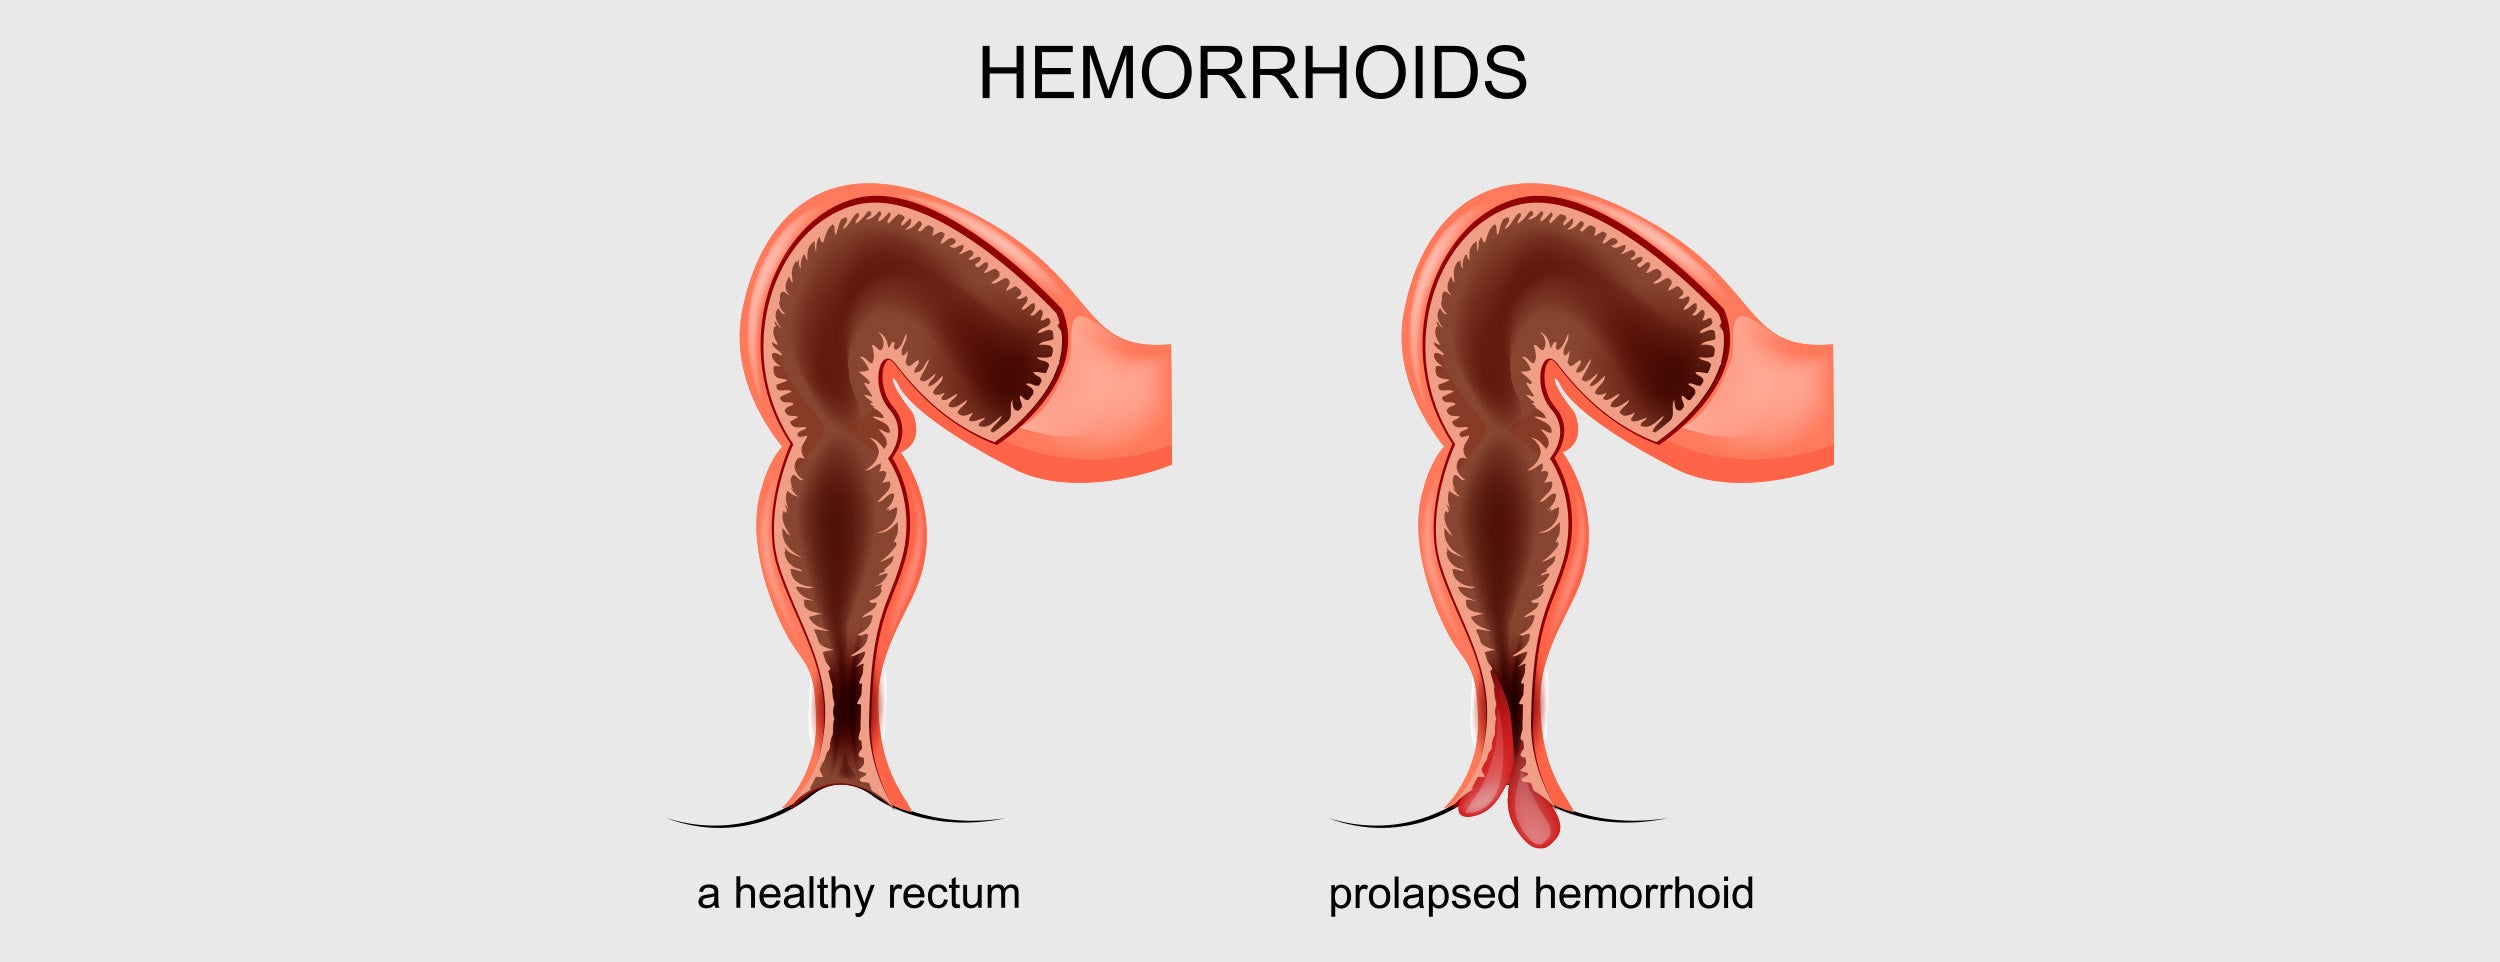 Prolapsing internal hemorrhoids causing internal pain and discomfort